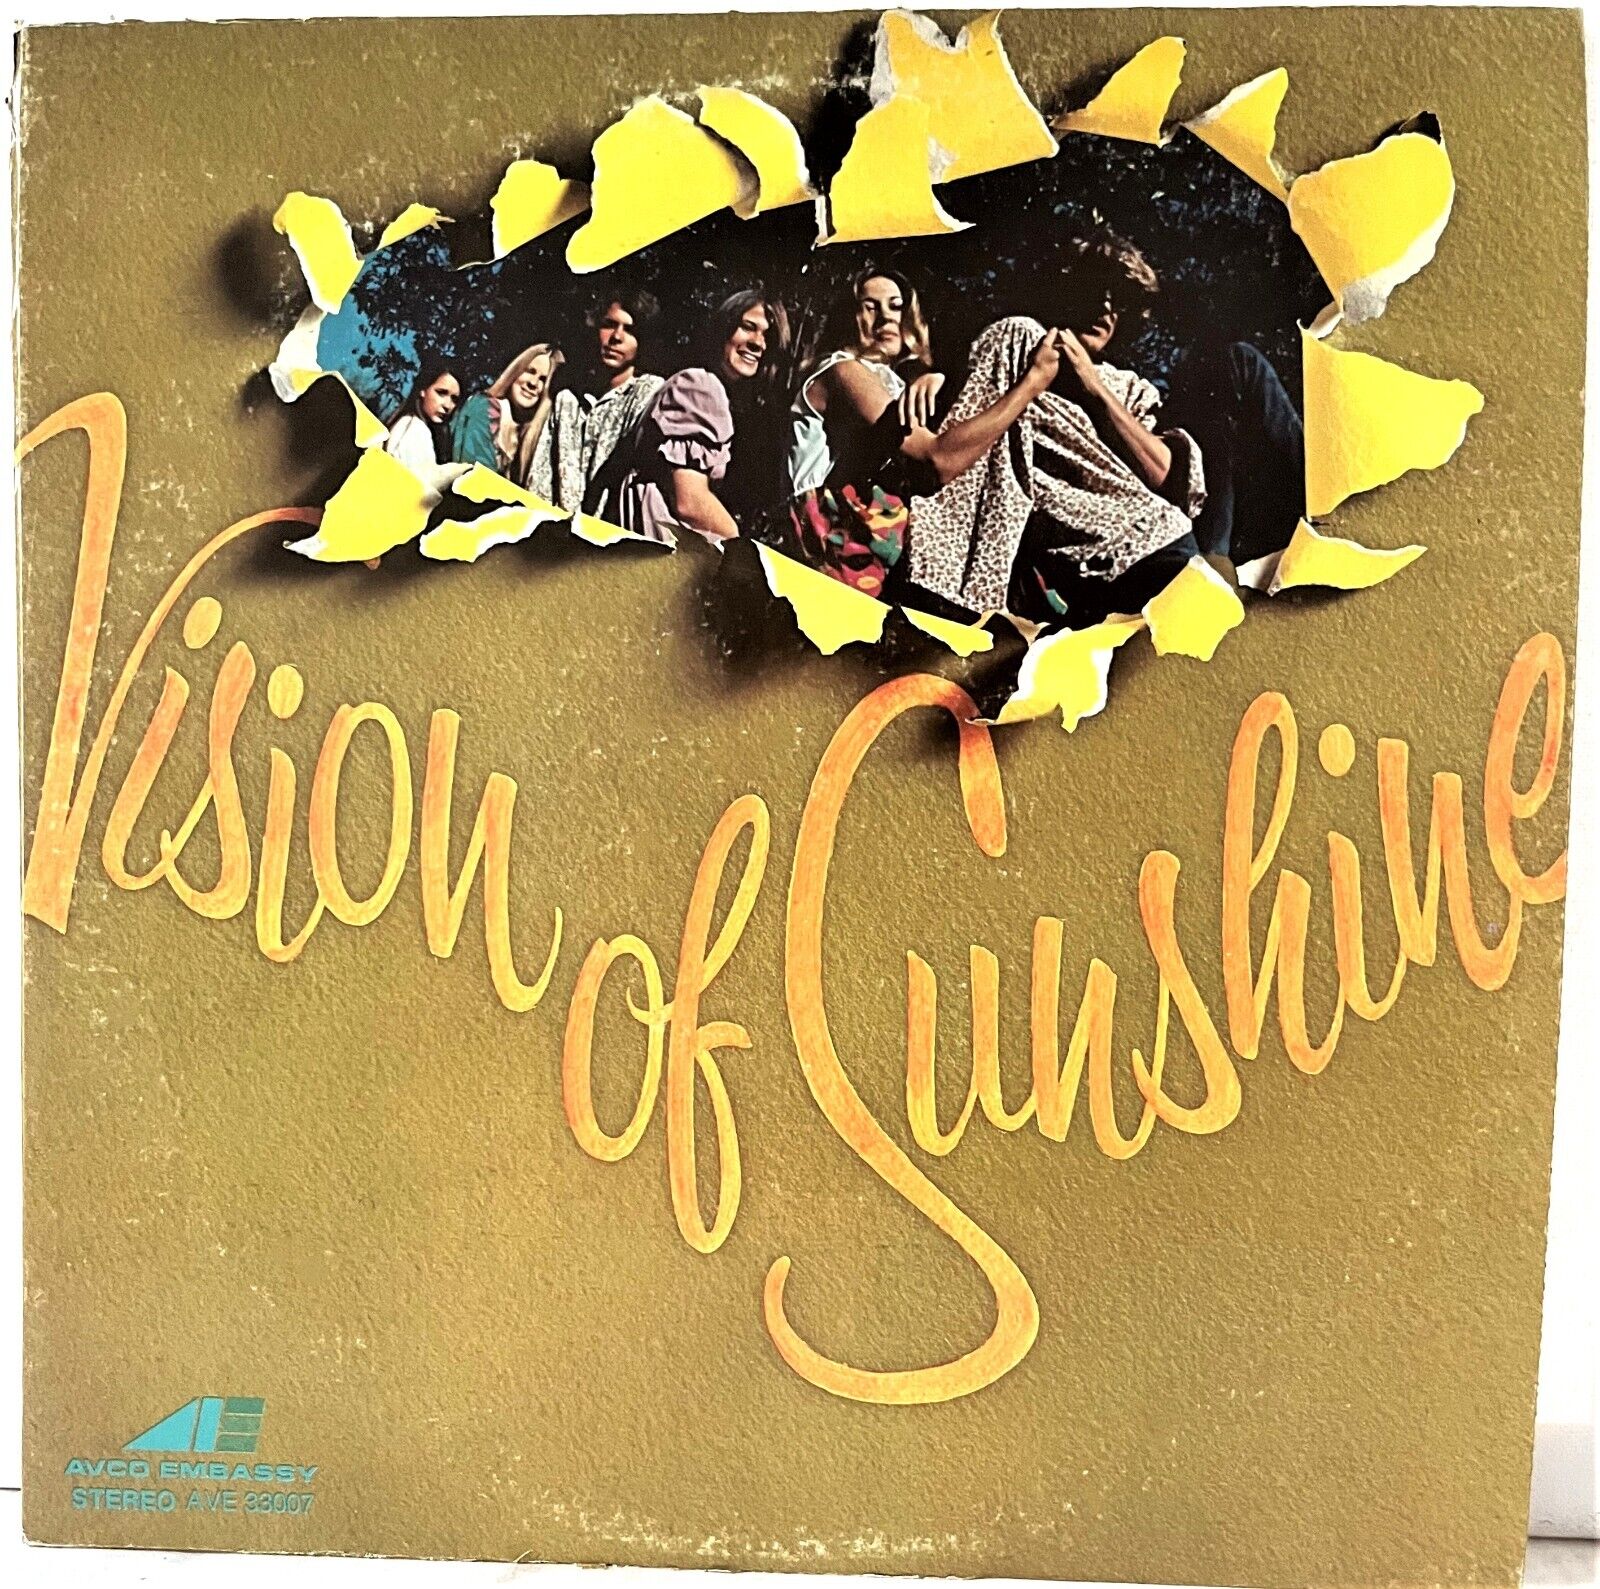 Vision Of Sunshine - Beautiful Xian Folk/Psych - 1970 Avco